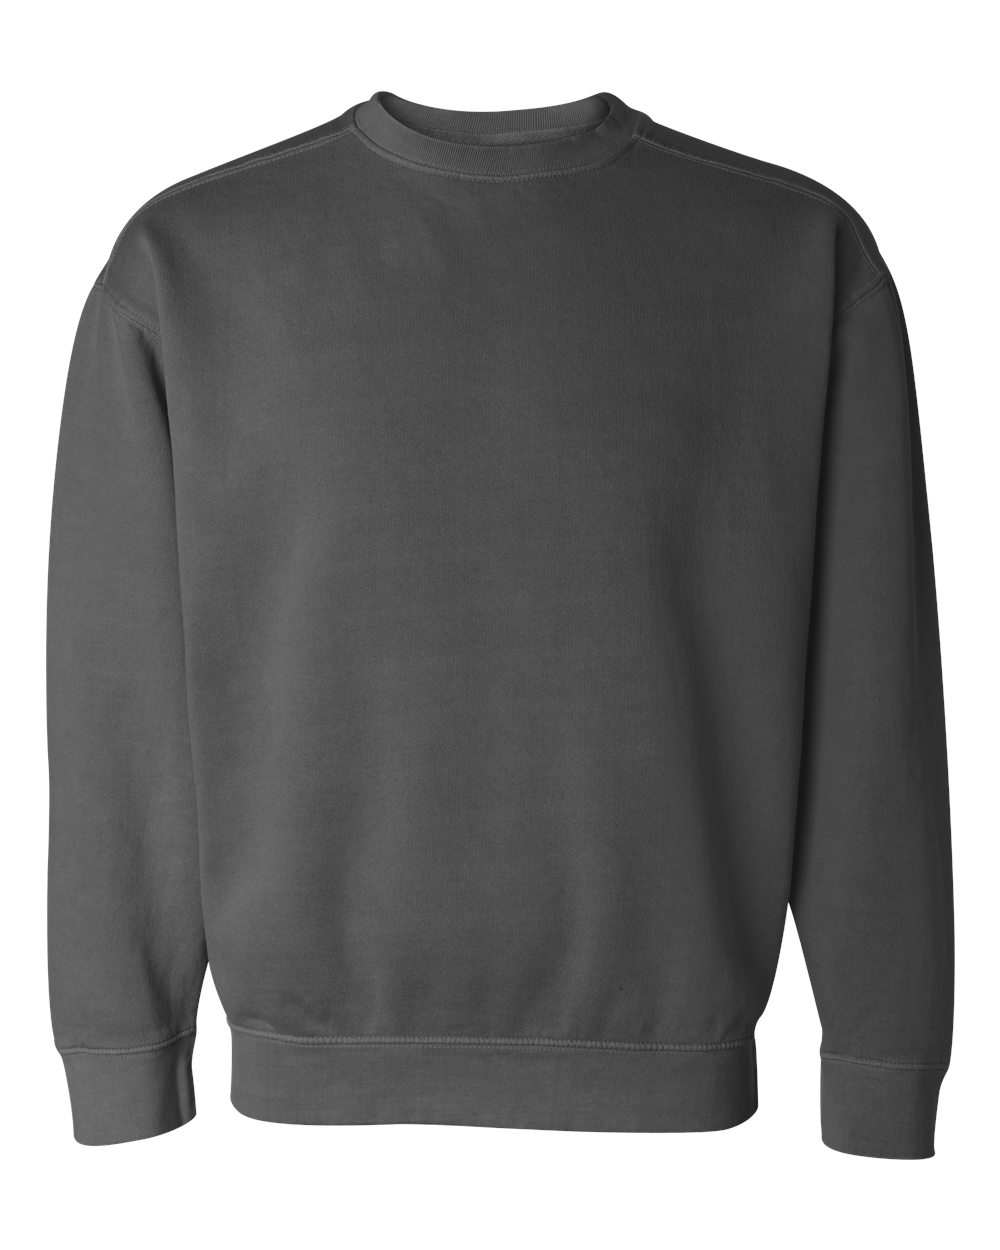 CC Garment Dyed Sweatshirt